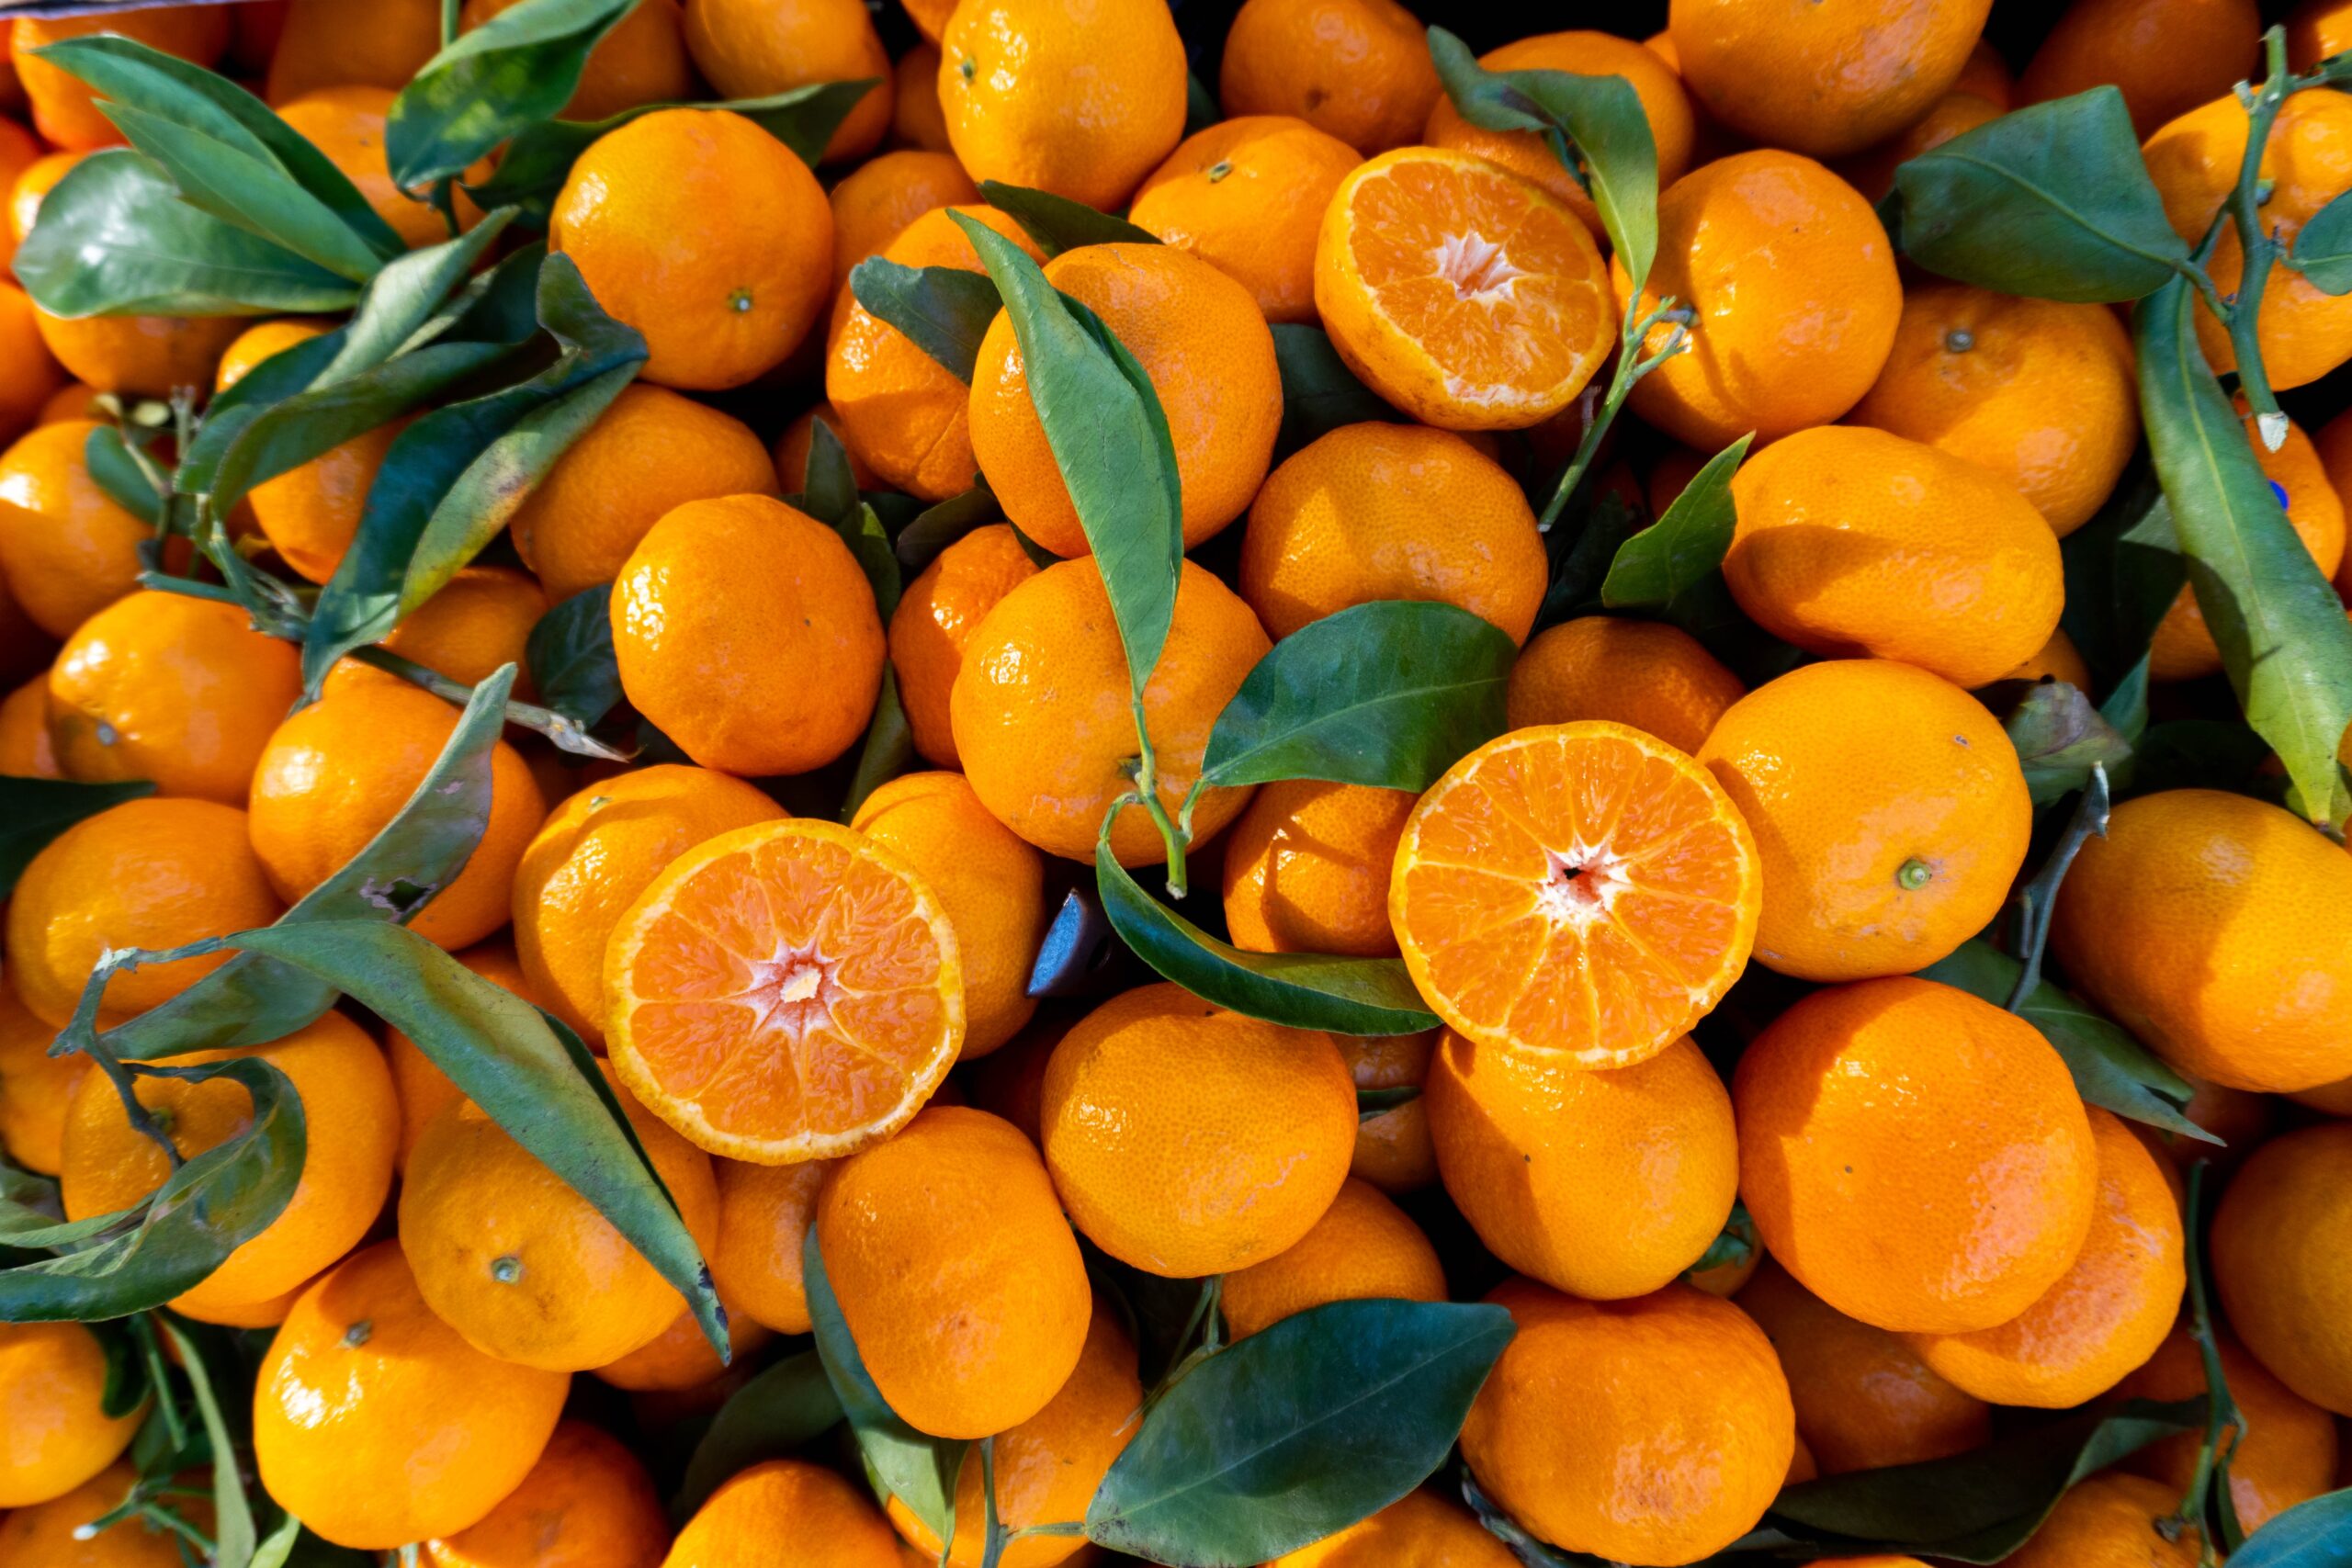 Morocco's Orange | https://fruitsauction.com/